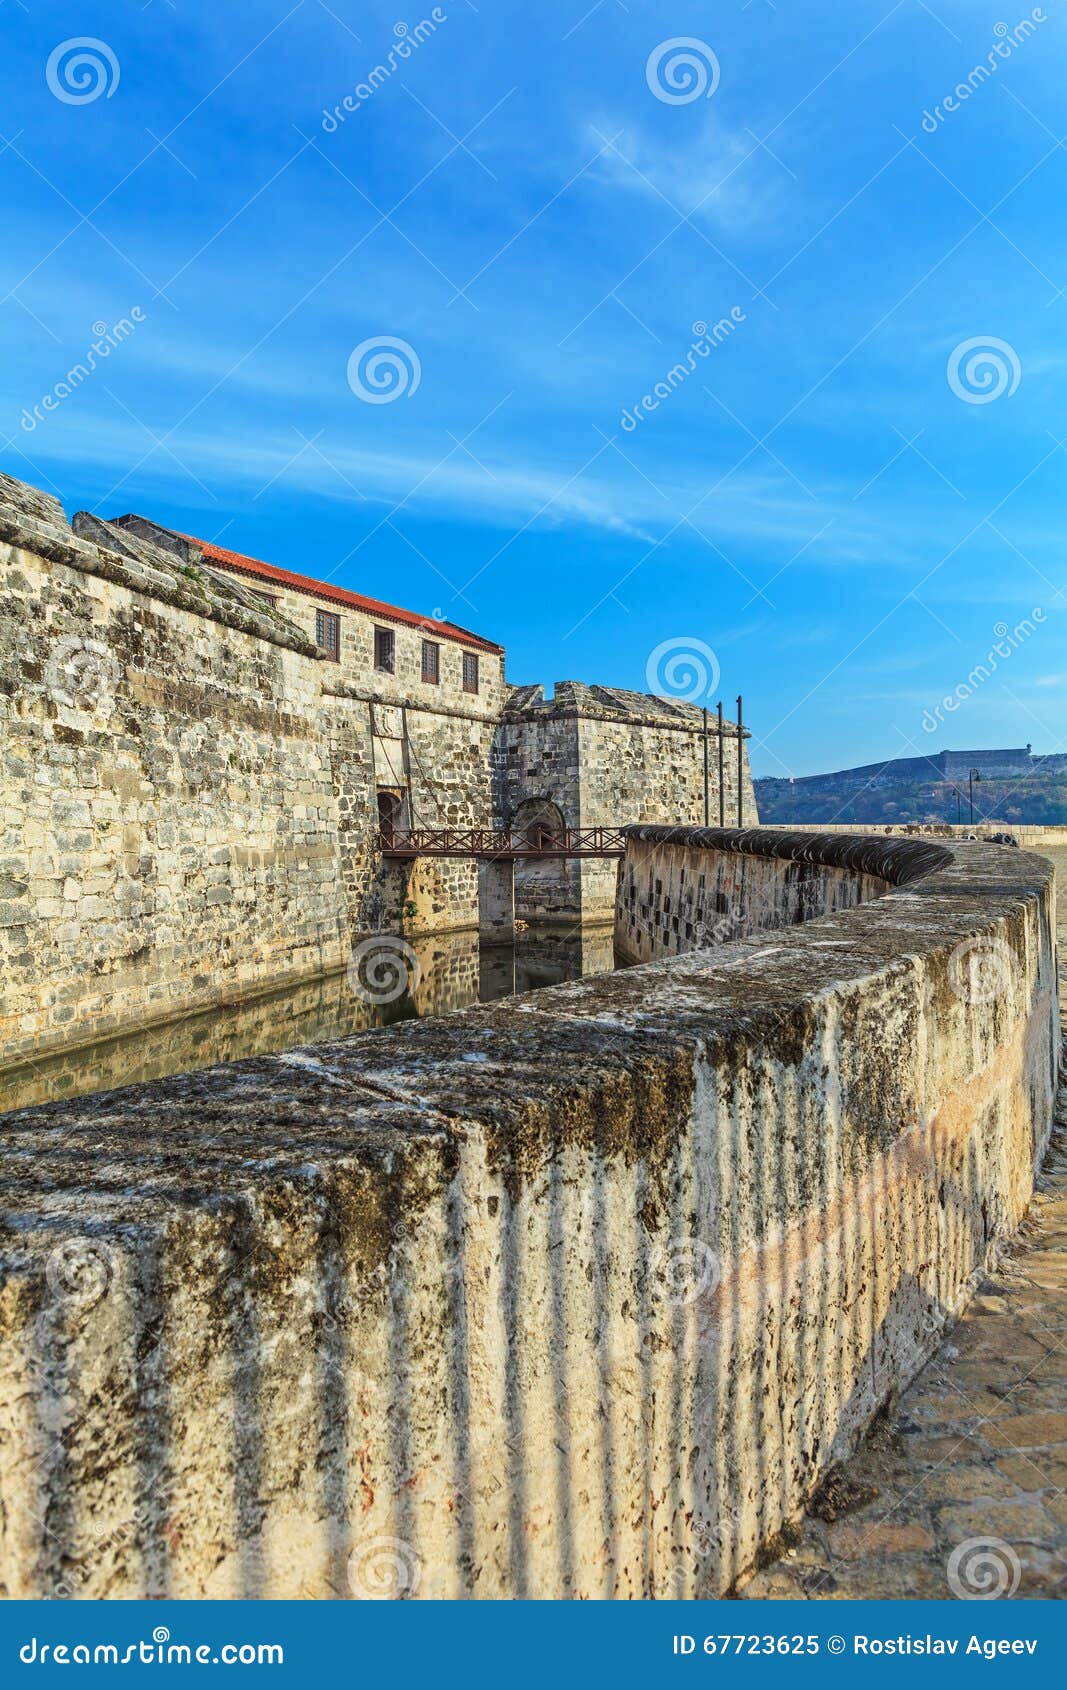 castle of the royal force (castillo de la real fuerza), fortress